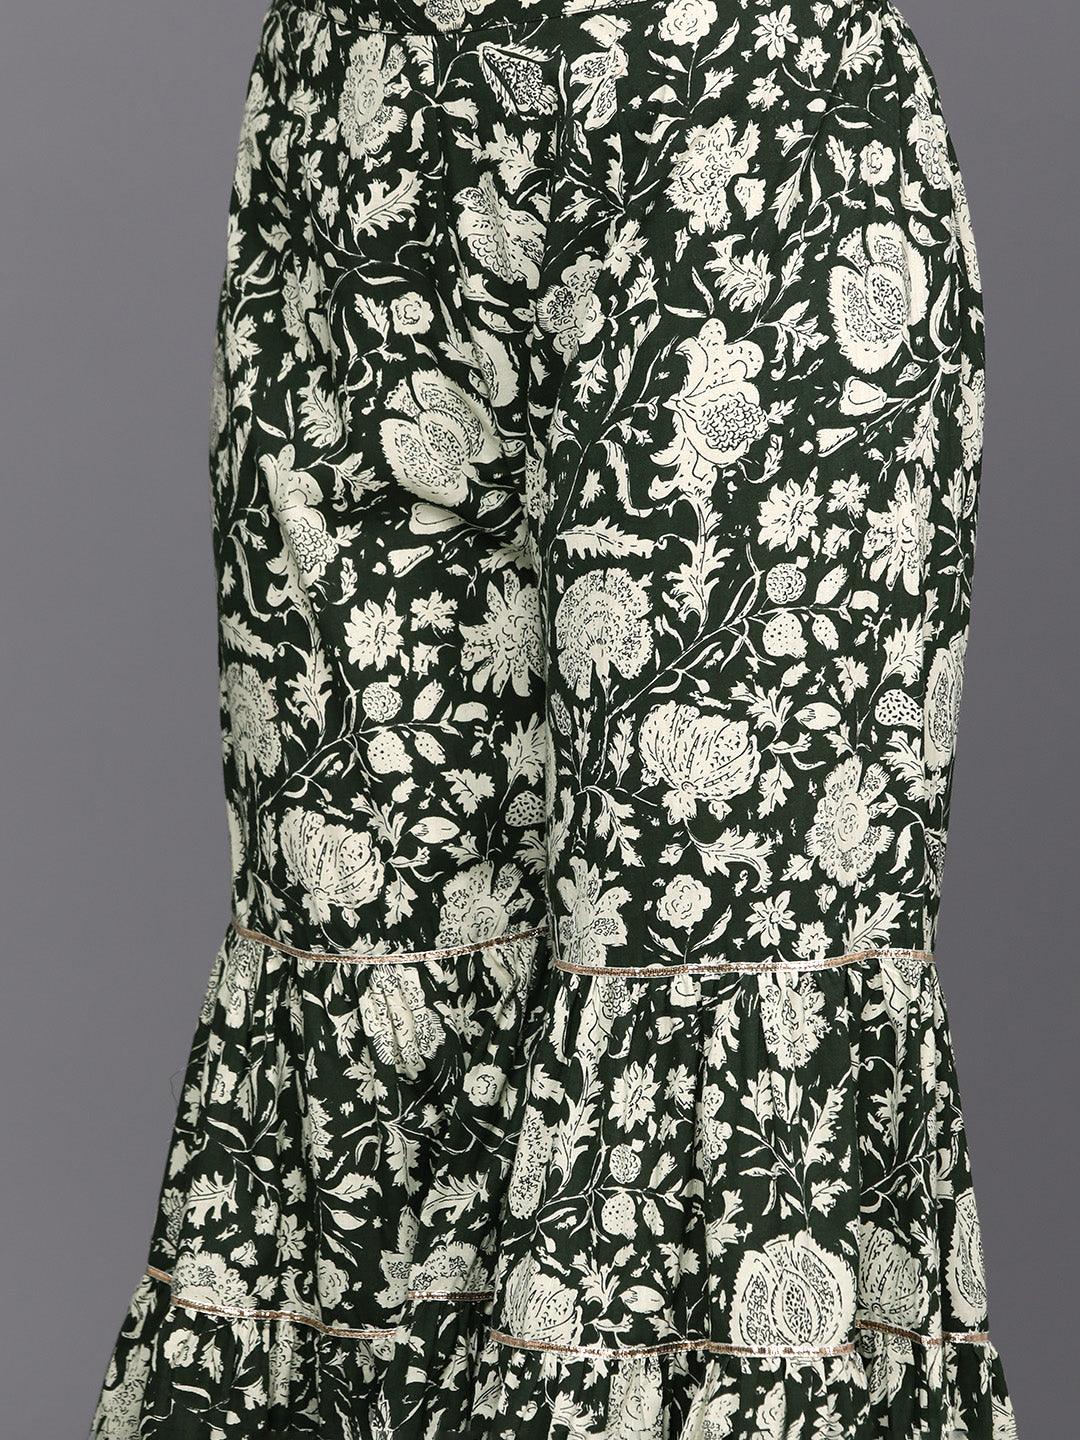 Green Yoke Design Cotton Straight Suit Set With Sharara - Libas